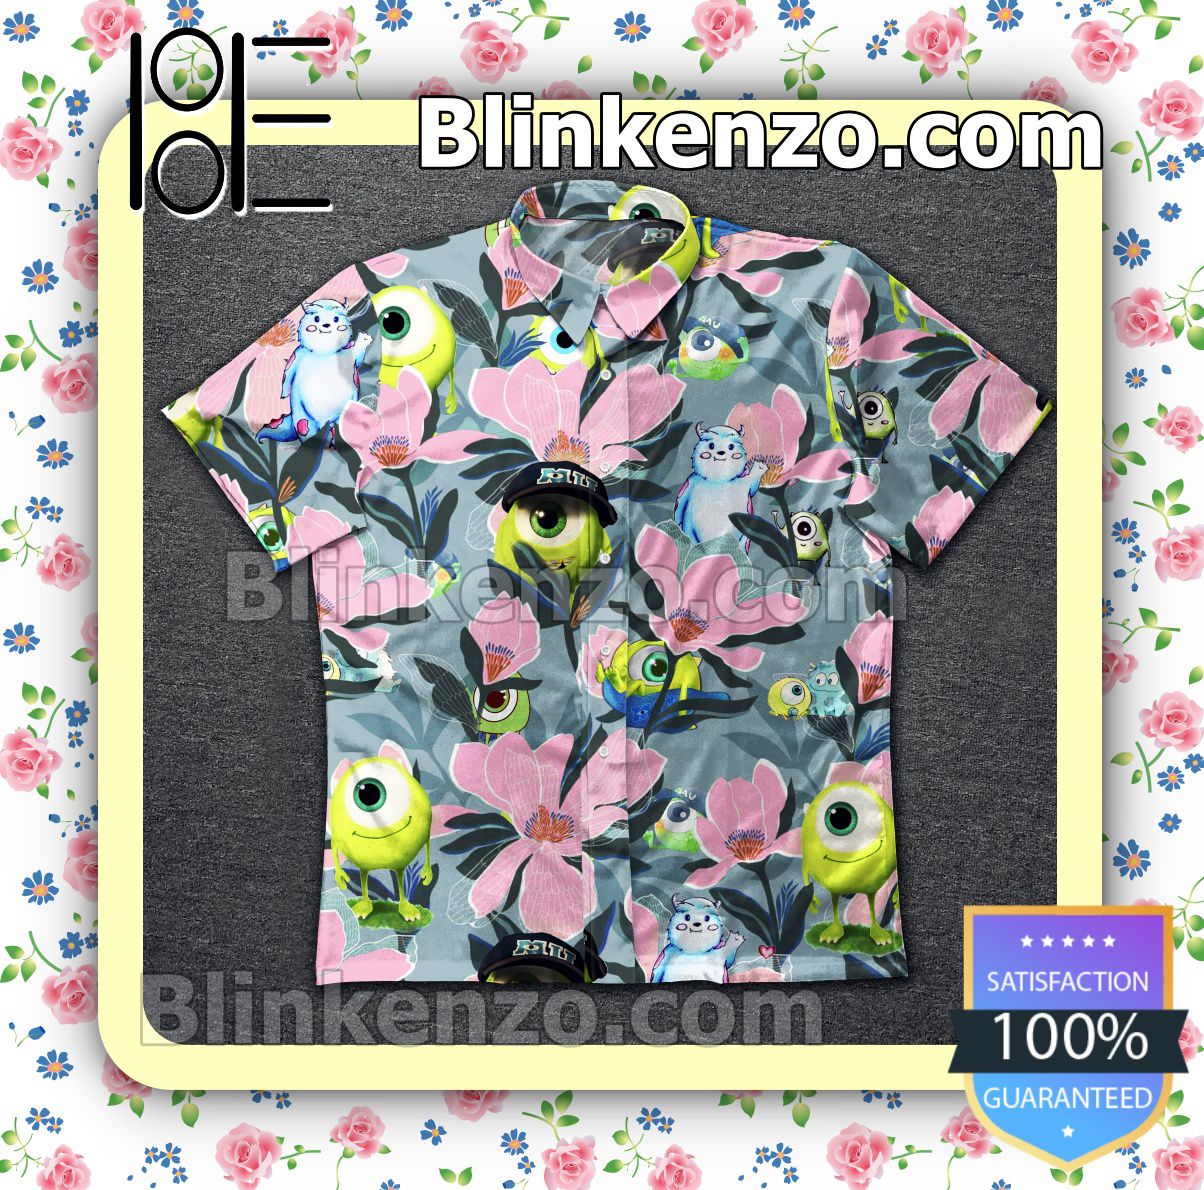 Sale Off Monster Mike Wazowski Flower Summer Shirts